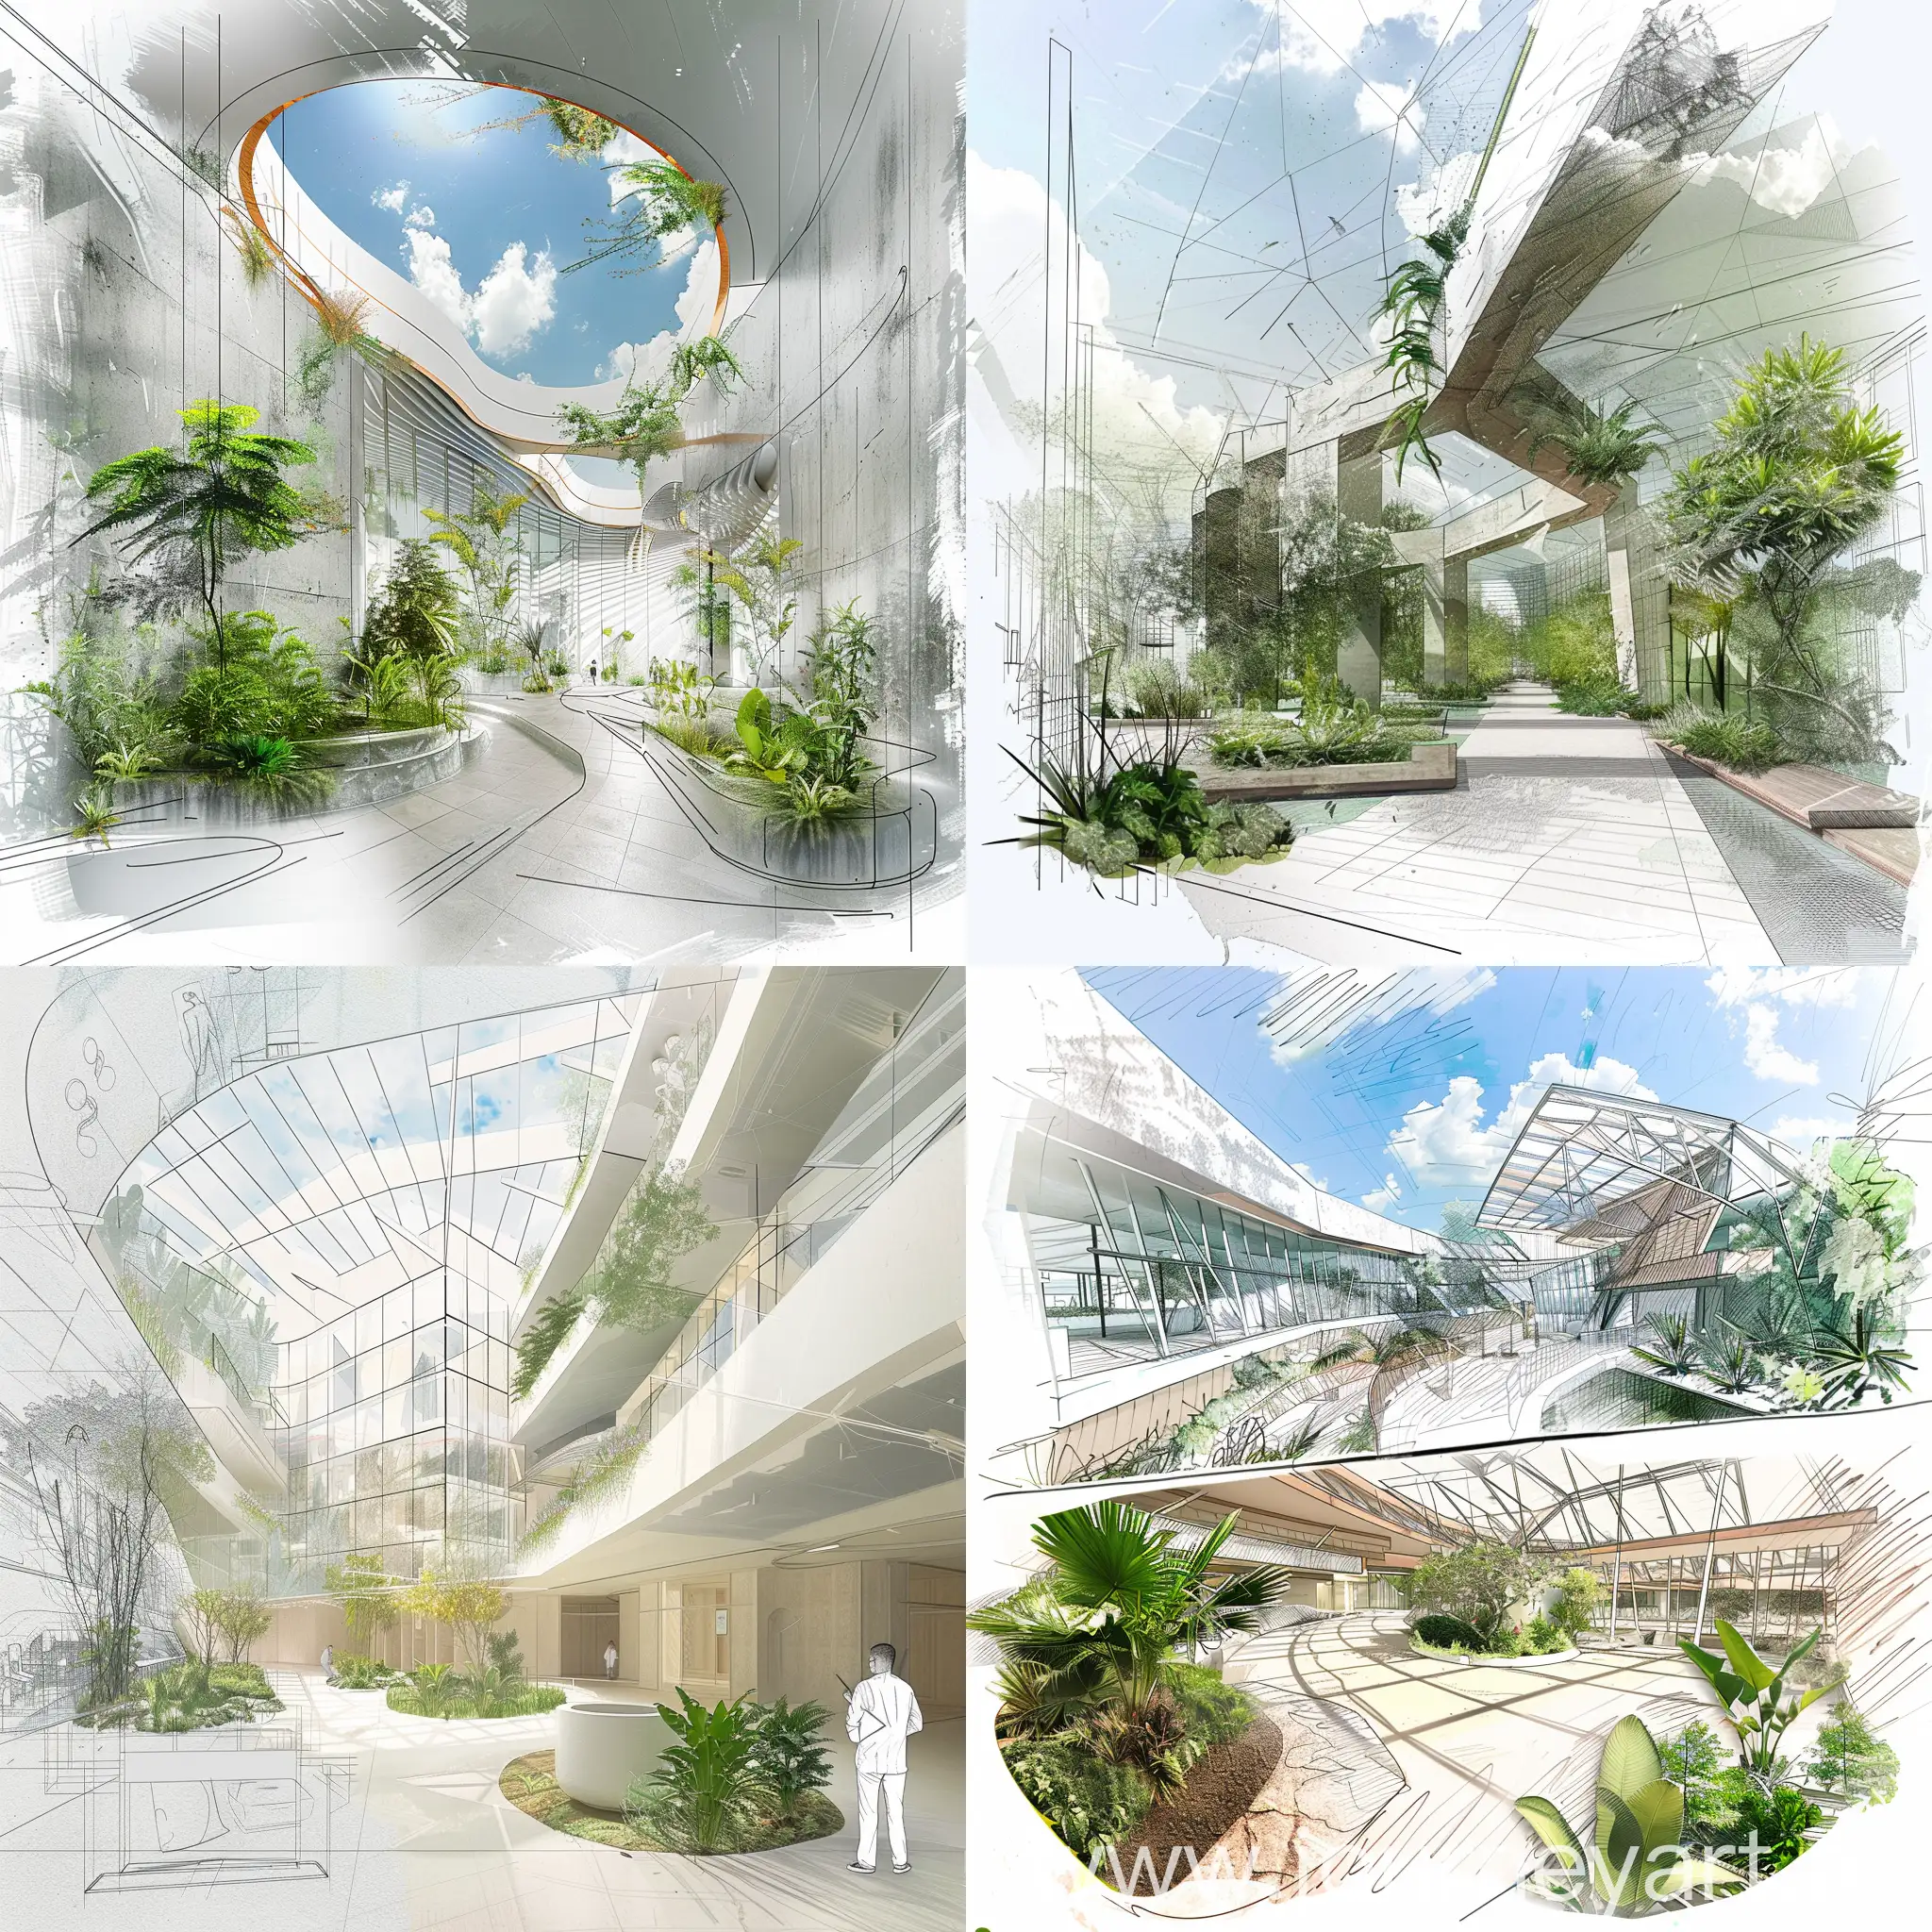 Rehabilitation-Center-Design-Atrium-Collage-with-Plants-and-Hospital-Sketch